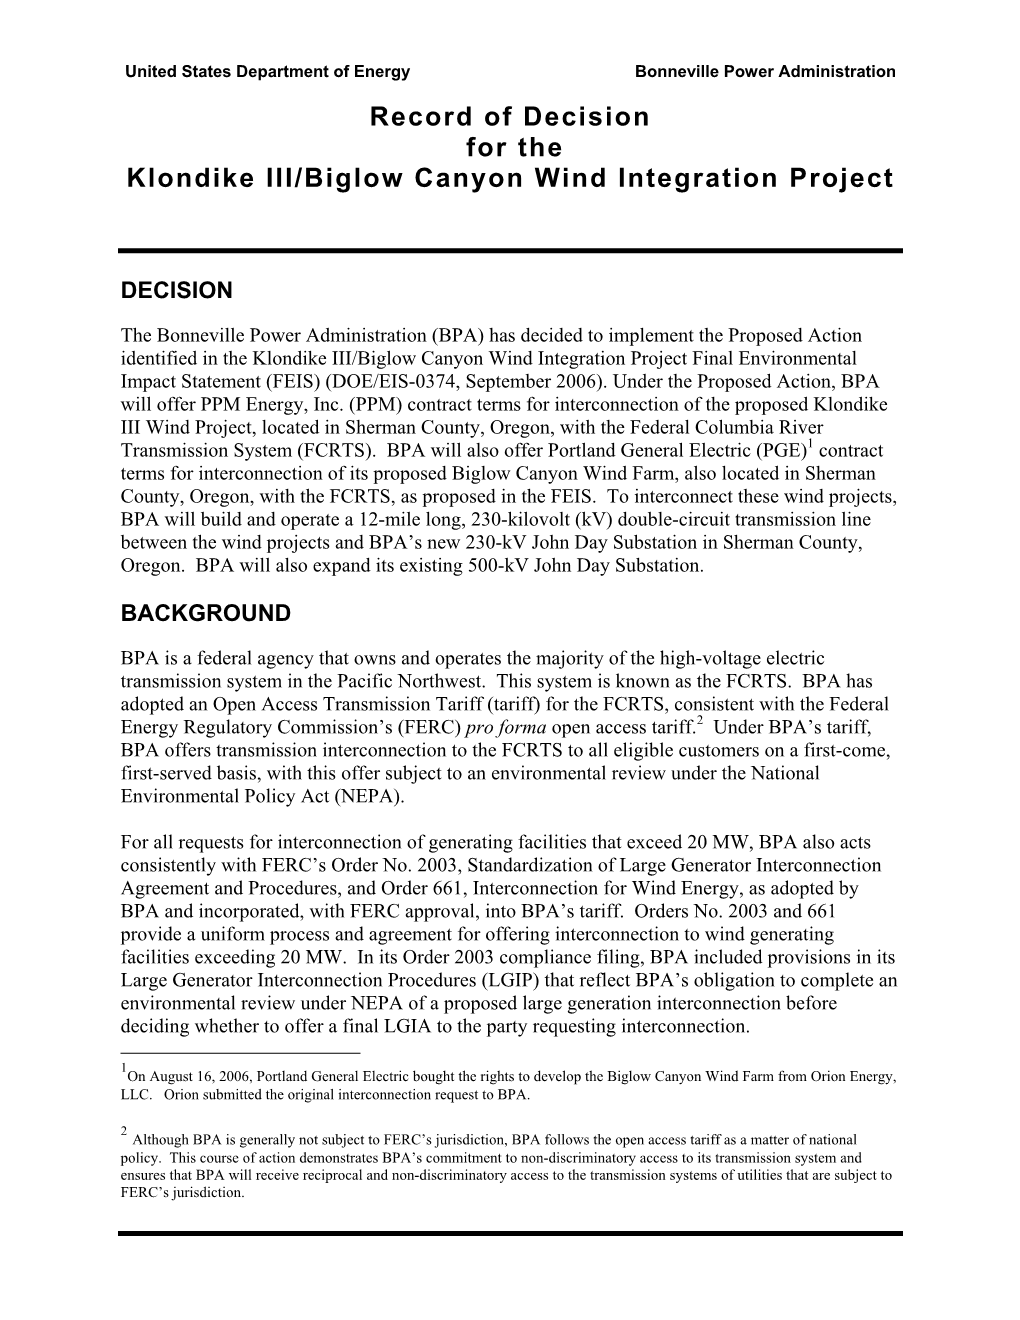 Klondike III/ Biglow Canyon Wind Integration Project